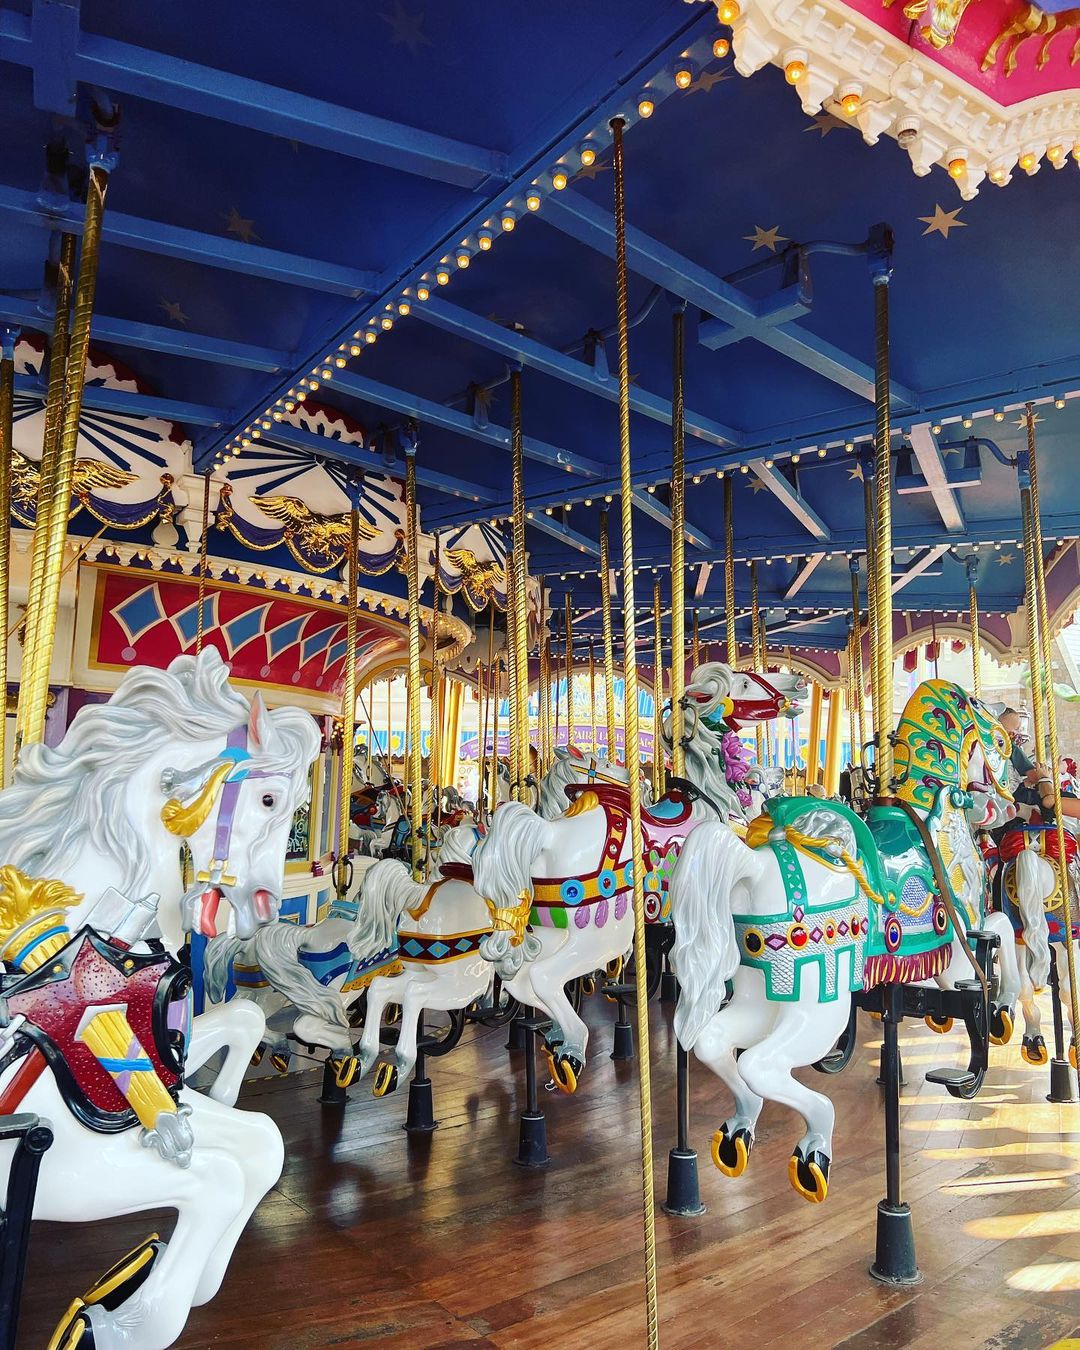 Prince Charming Regal Carrousel - Magic Kingdom Attraction